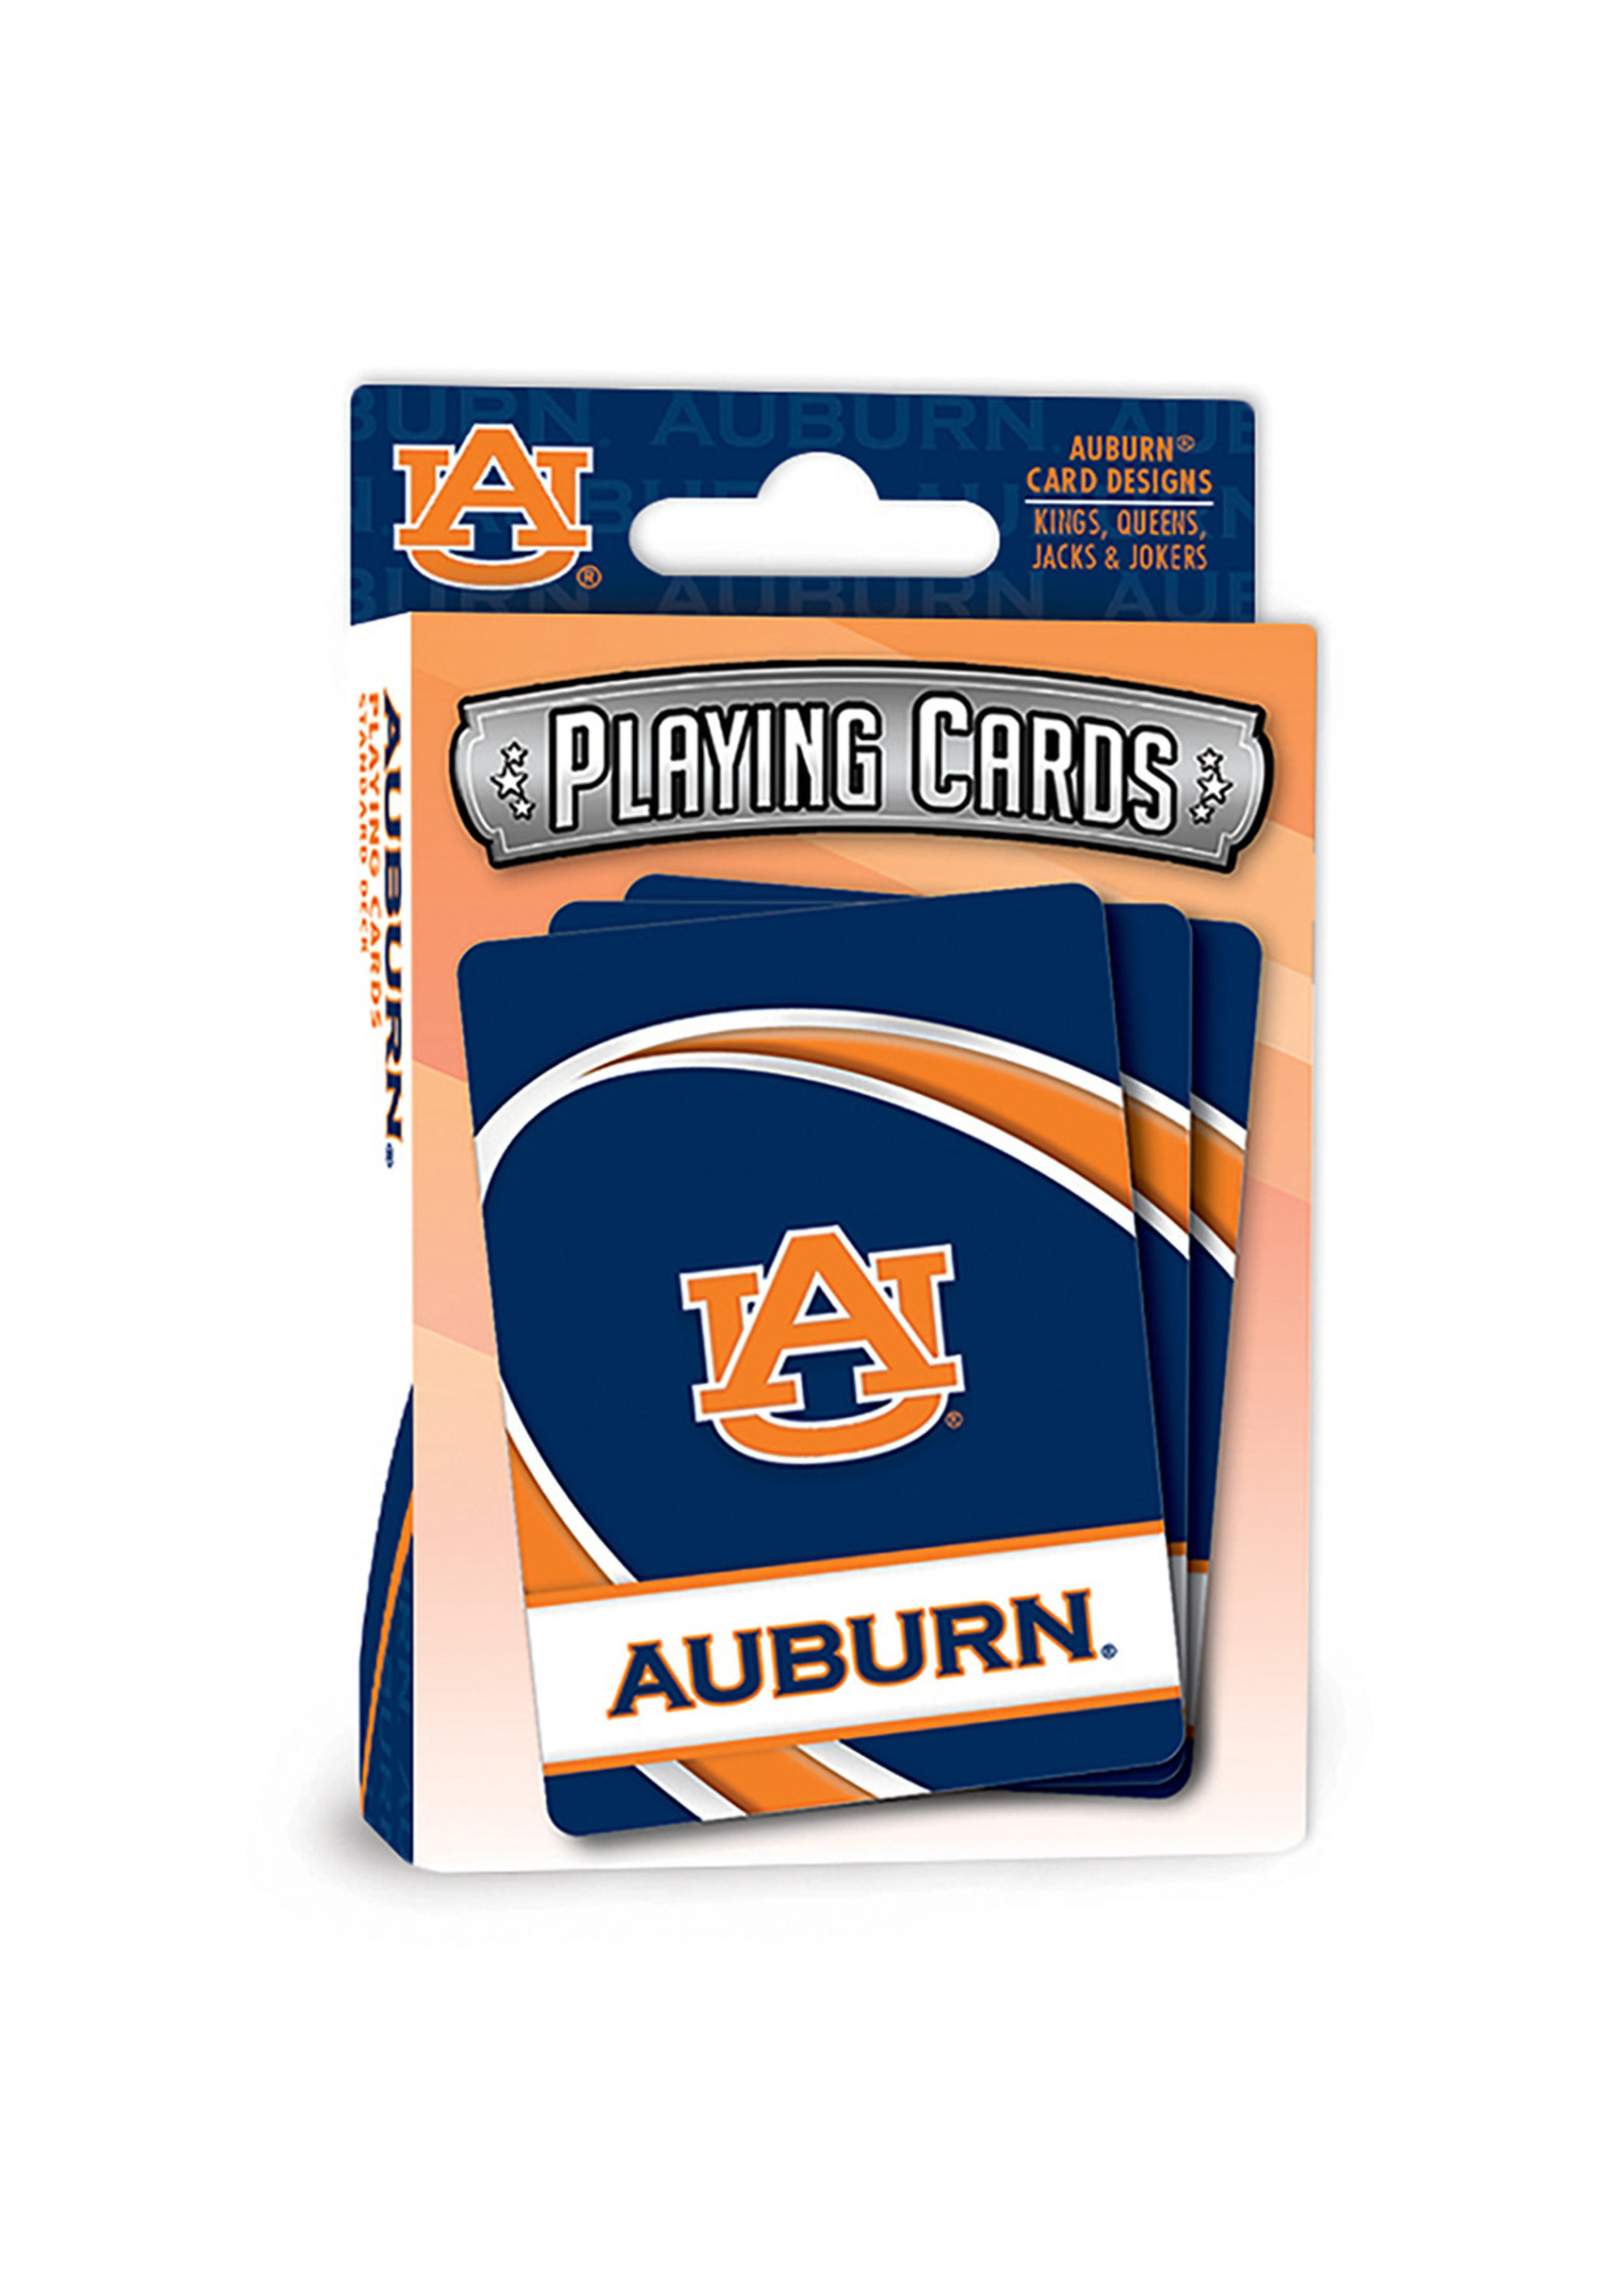 Auburn Playing Cards